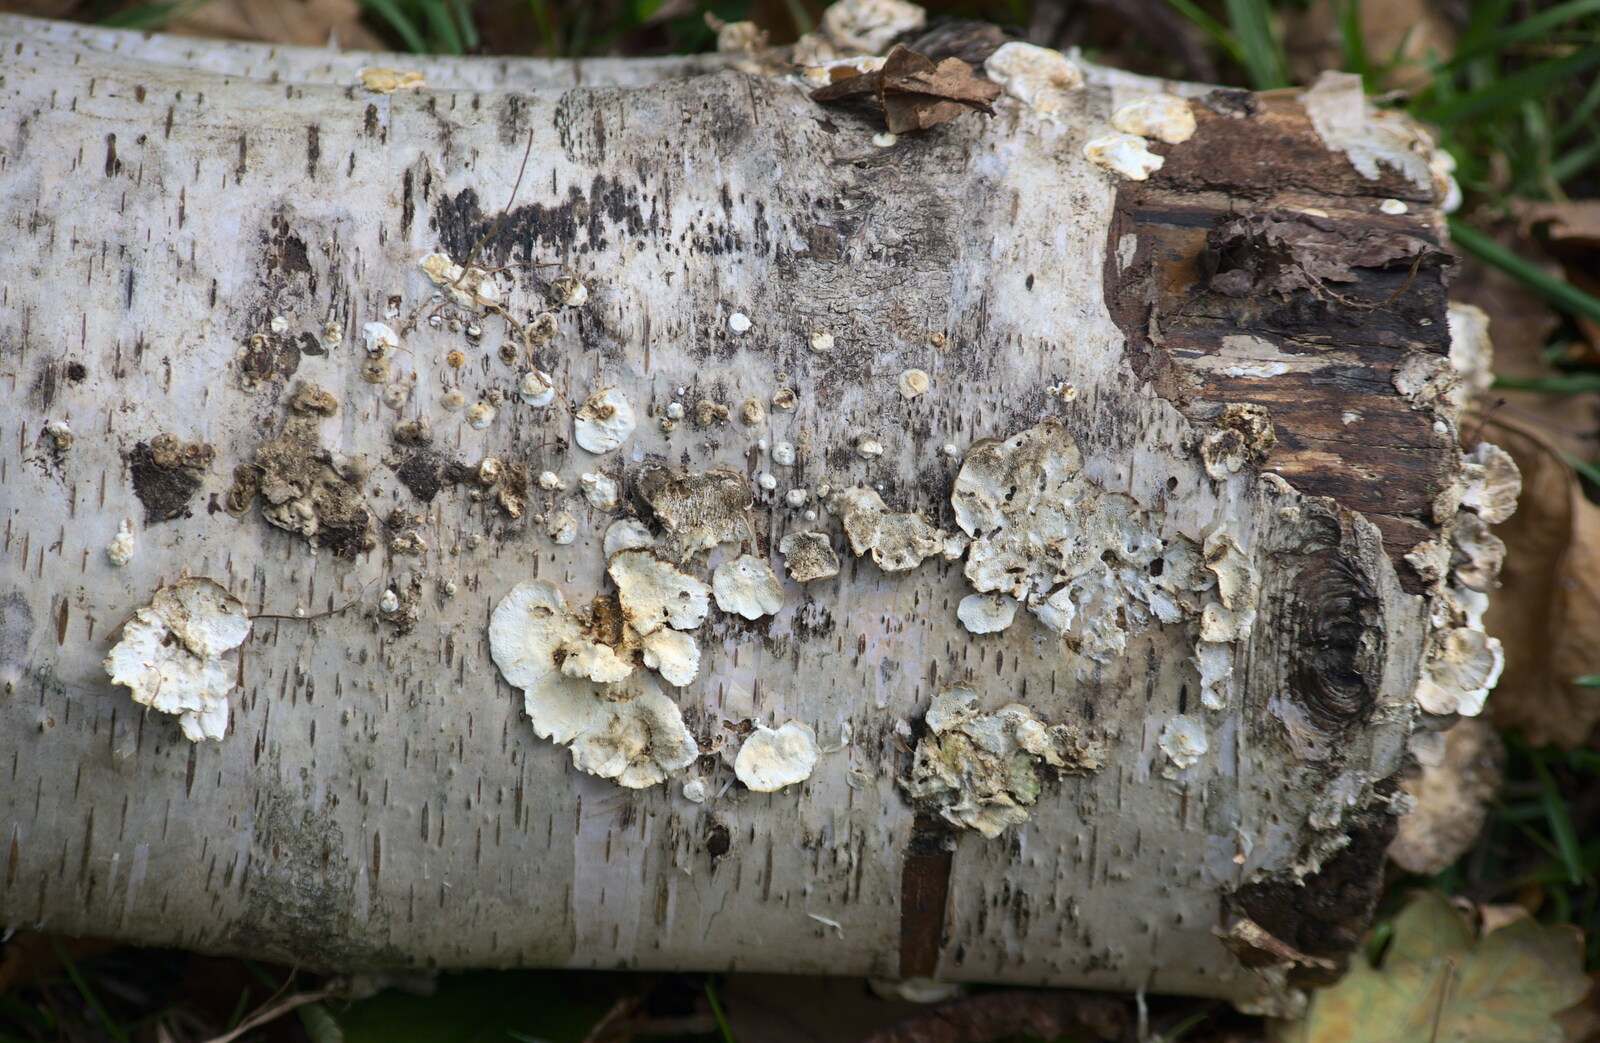 Cool fungus on a silver birch from Another Walk around Thornham Estate, Suffolk - 27th October 2014